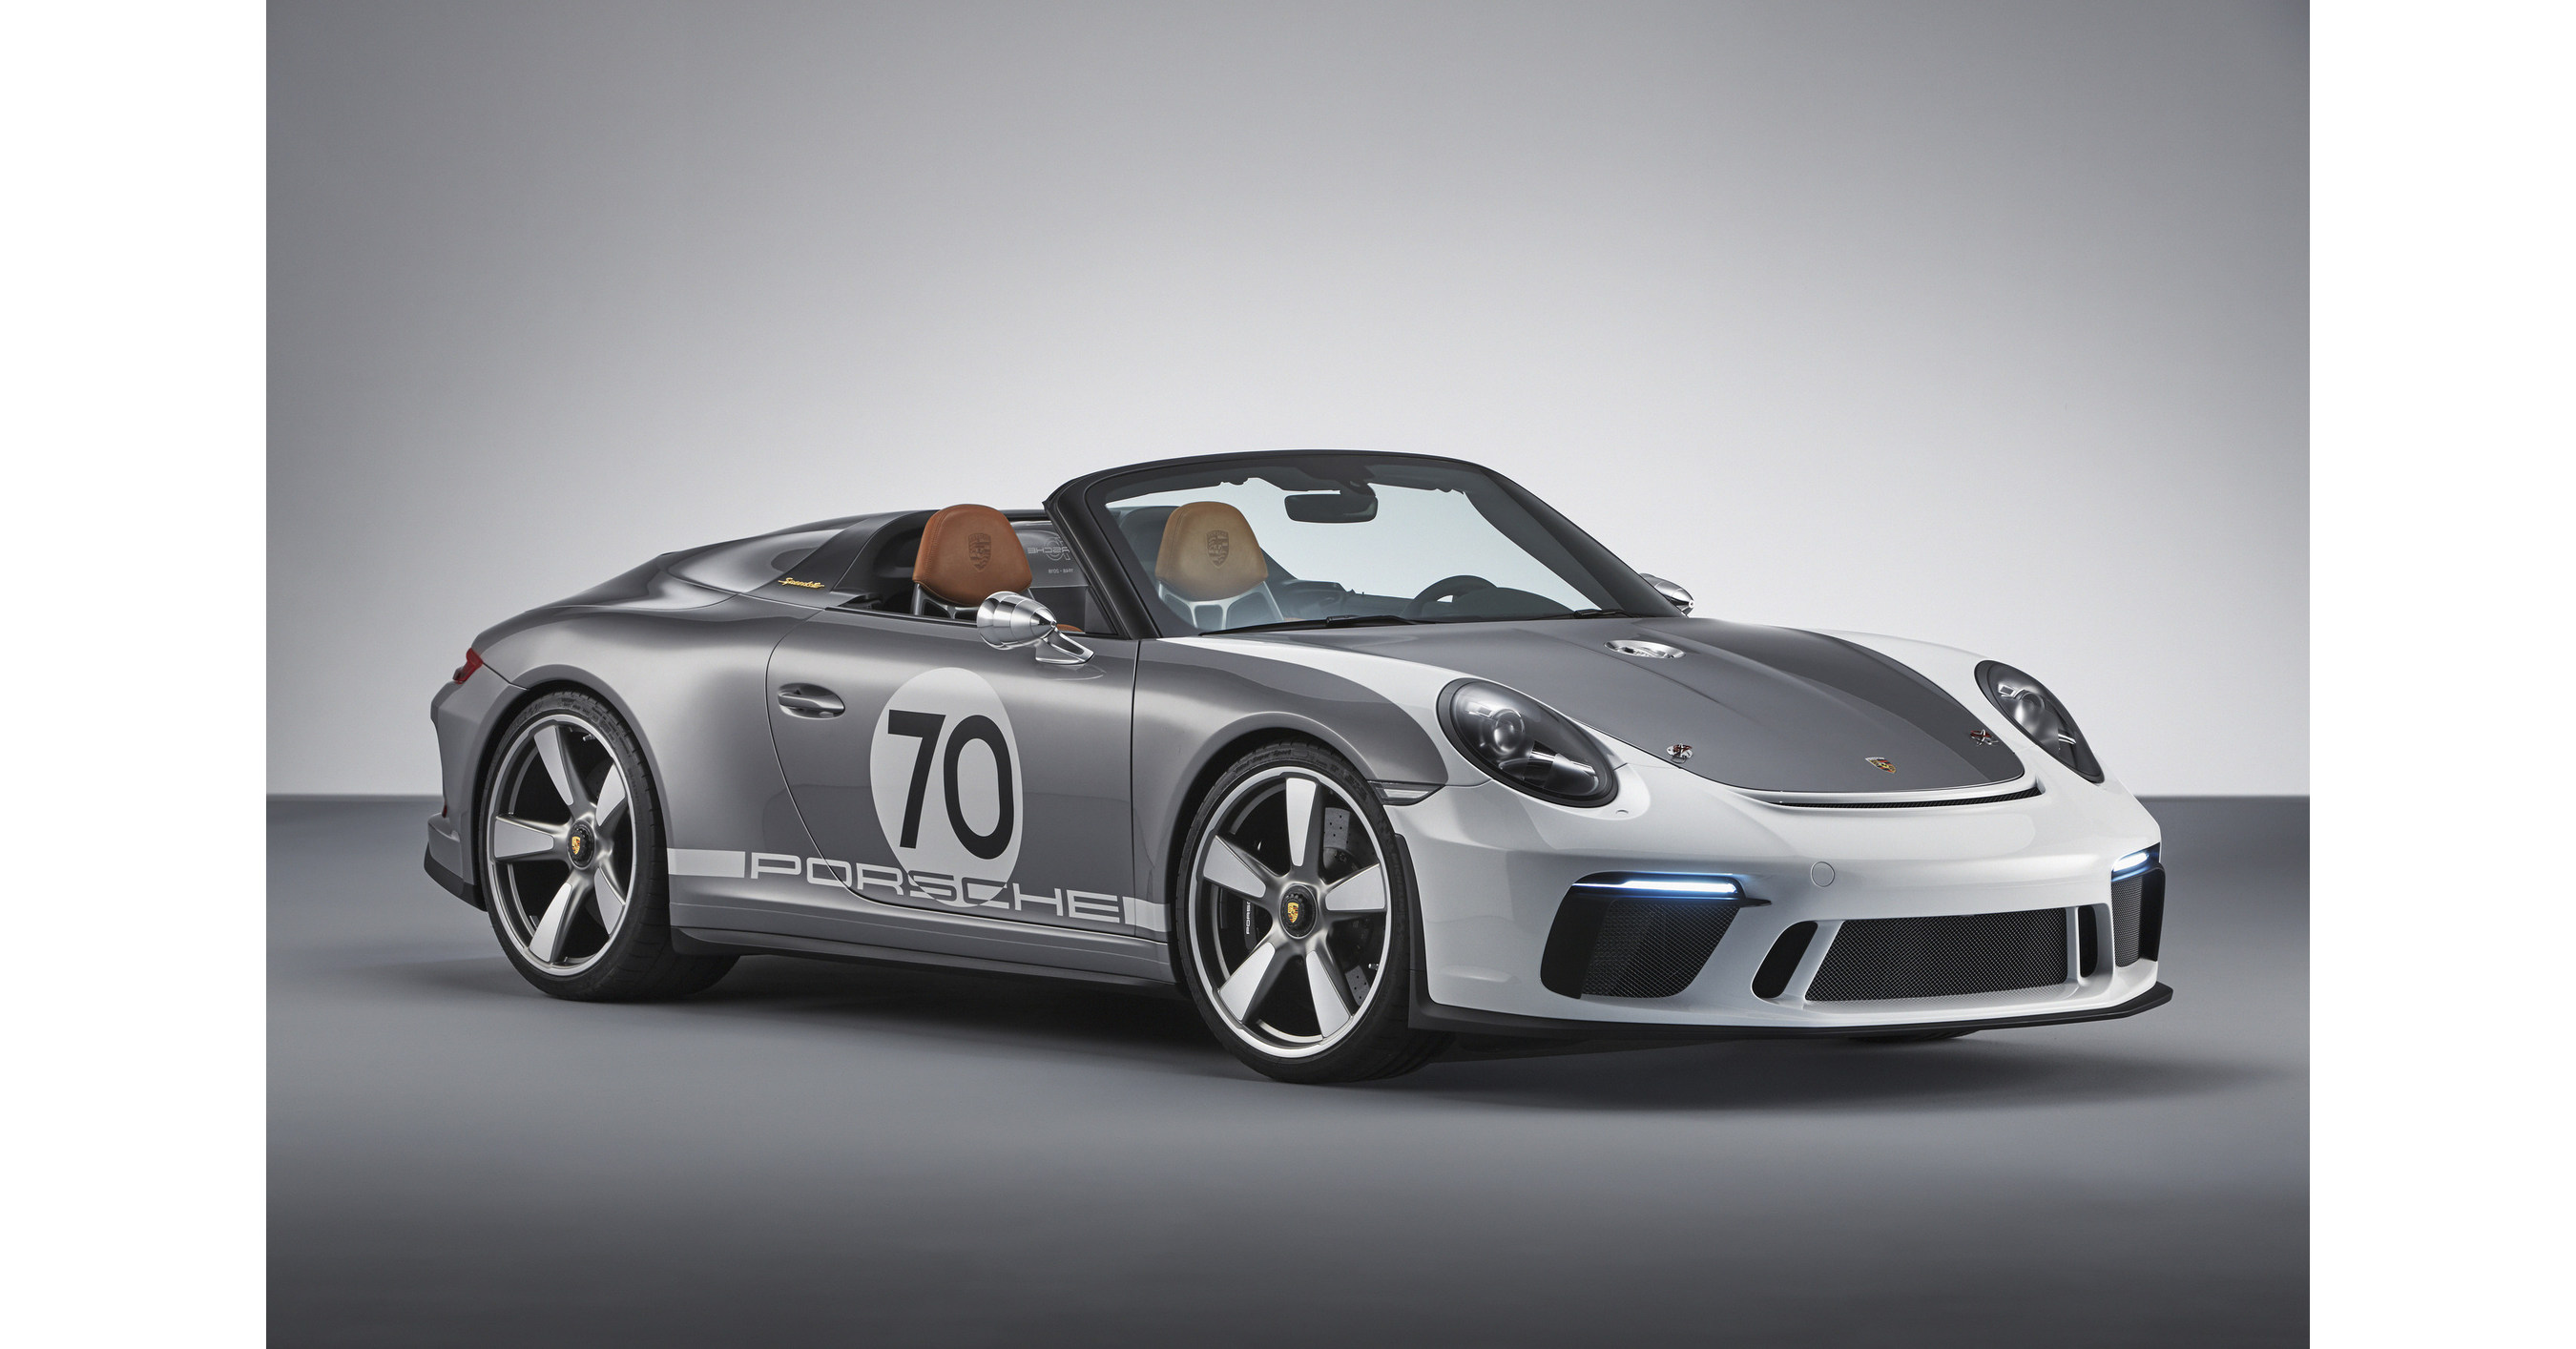 Restored Porsche 911 combines heritage and fashion - Porsche Newsroom